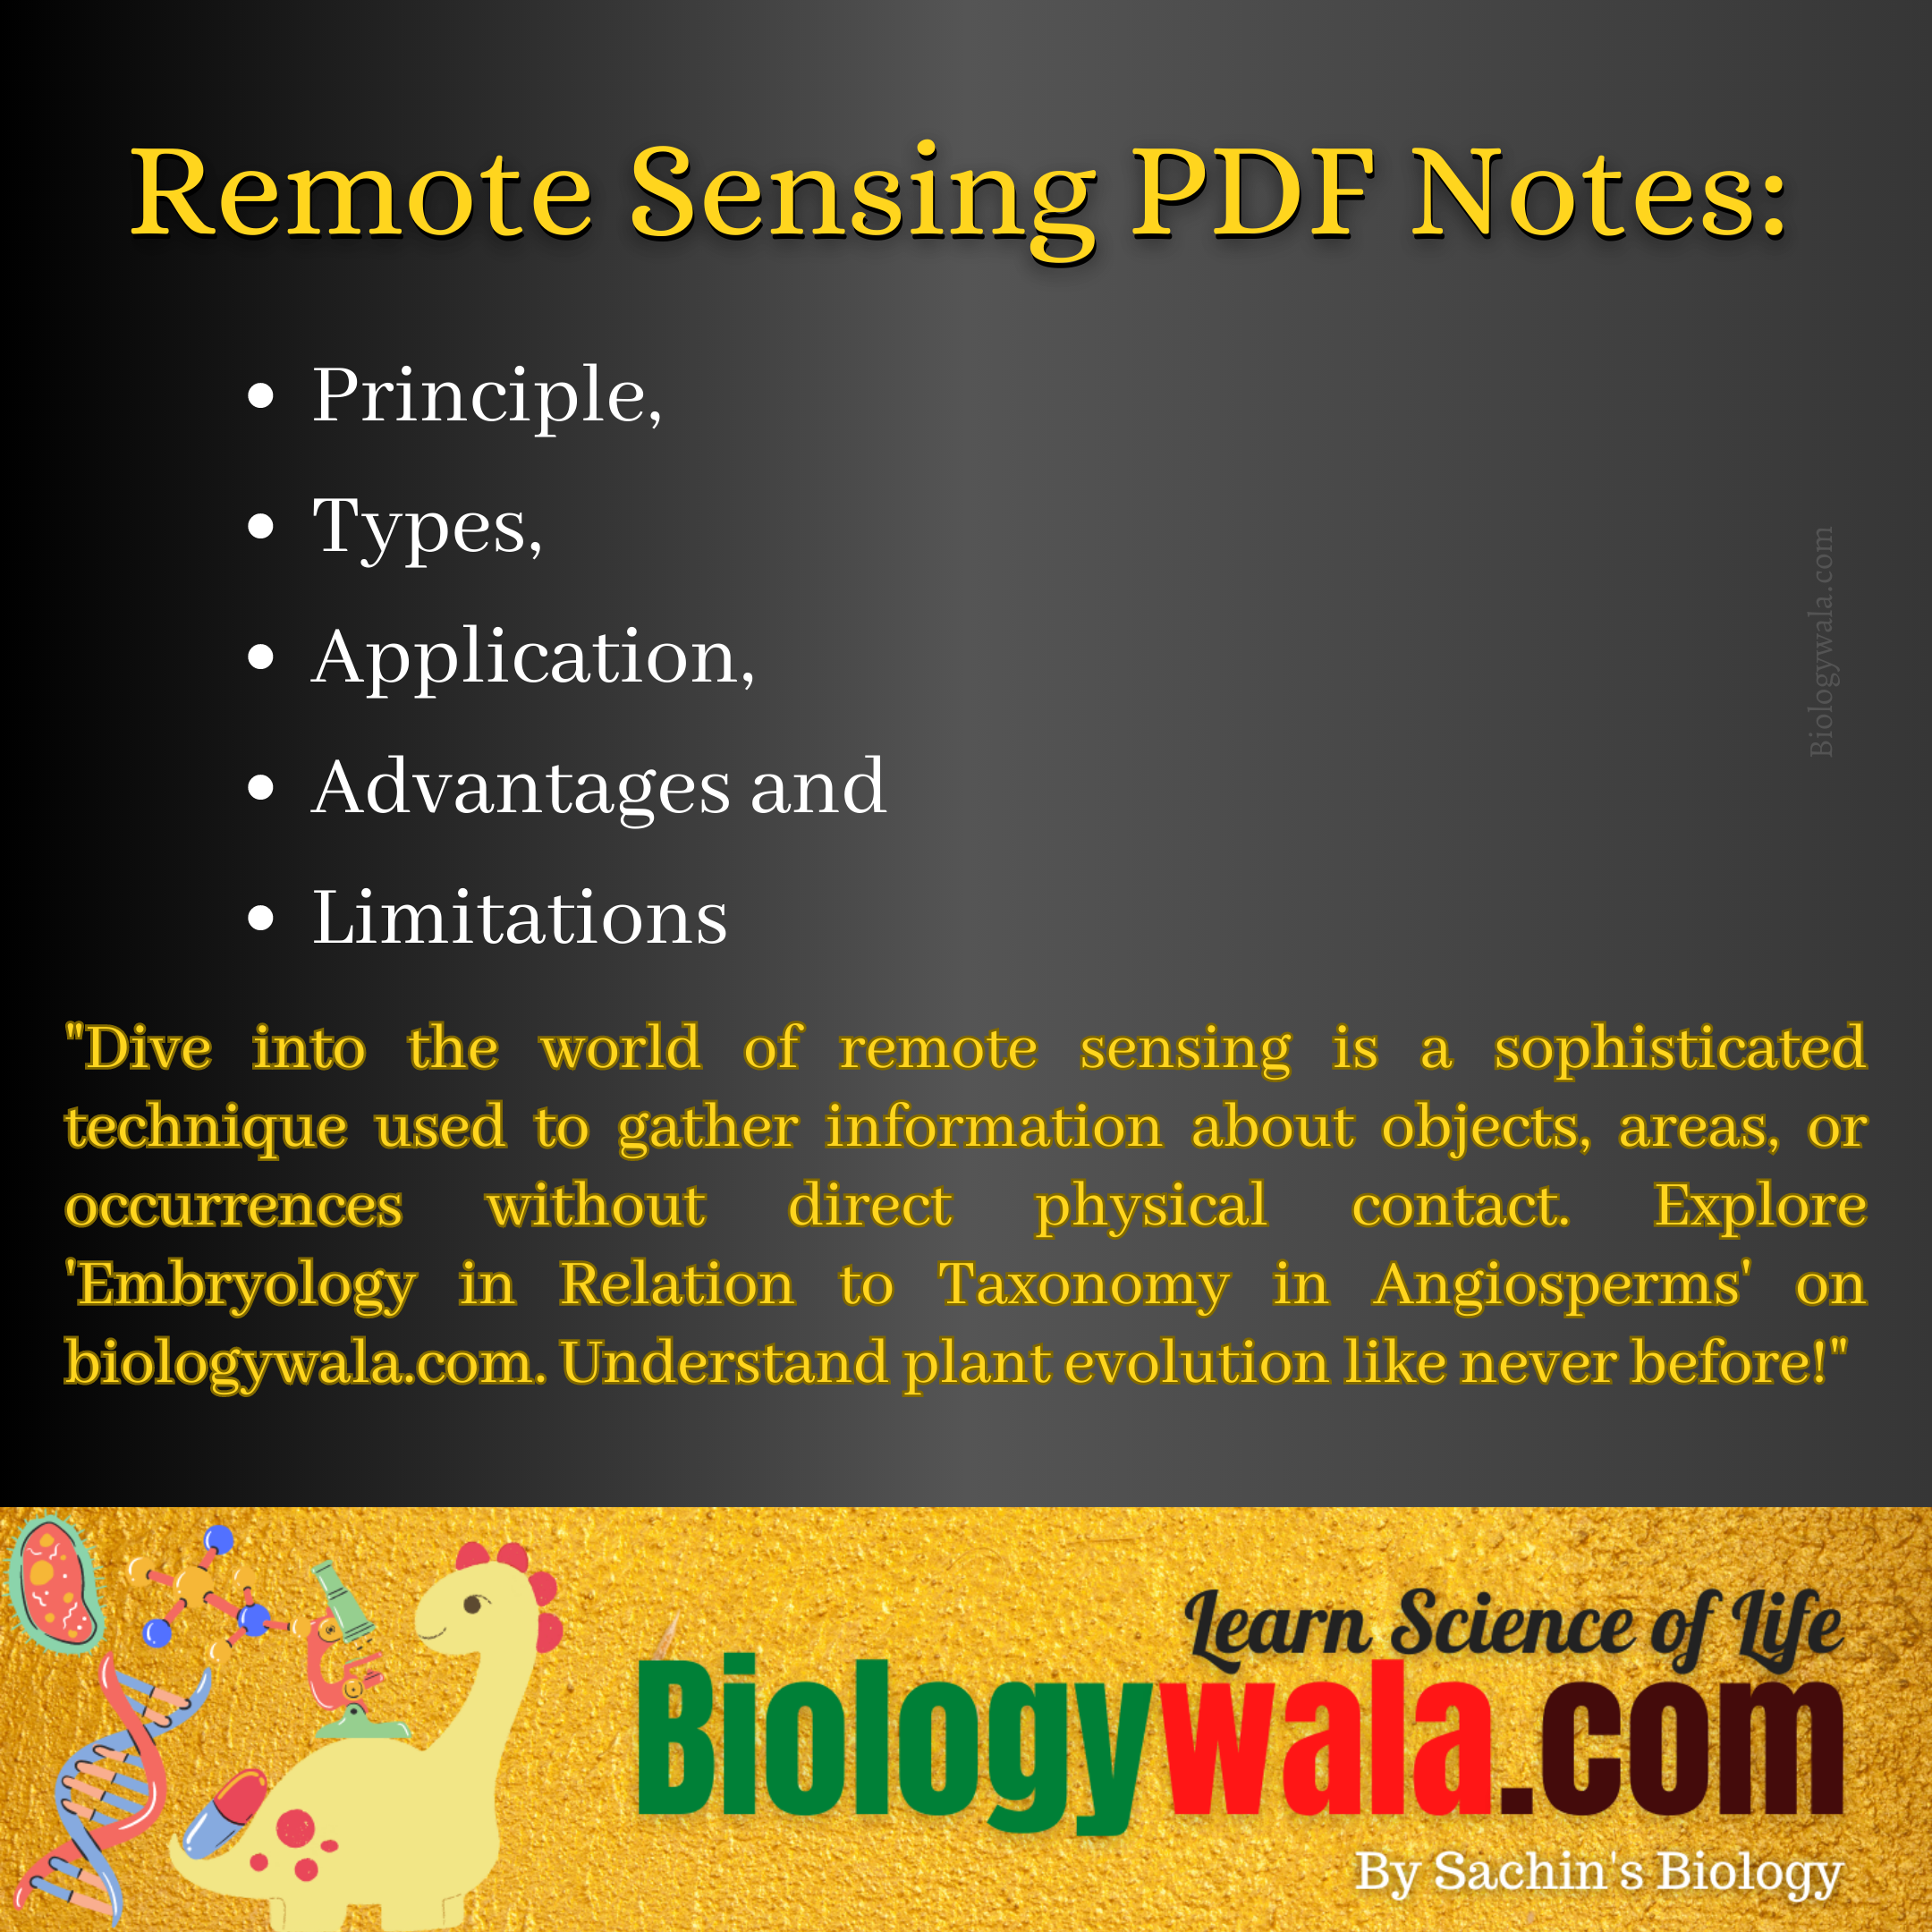 Remote Sensing PDF Notes: 2 Types, Application